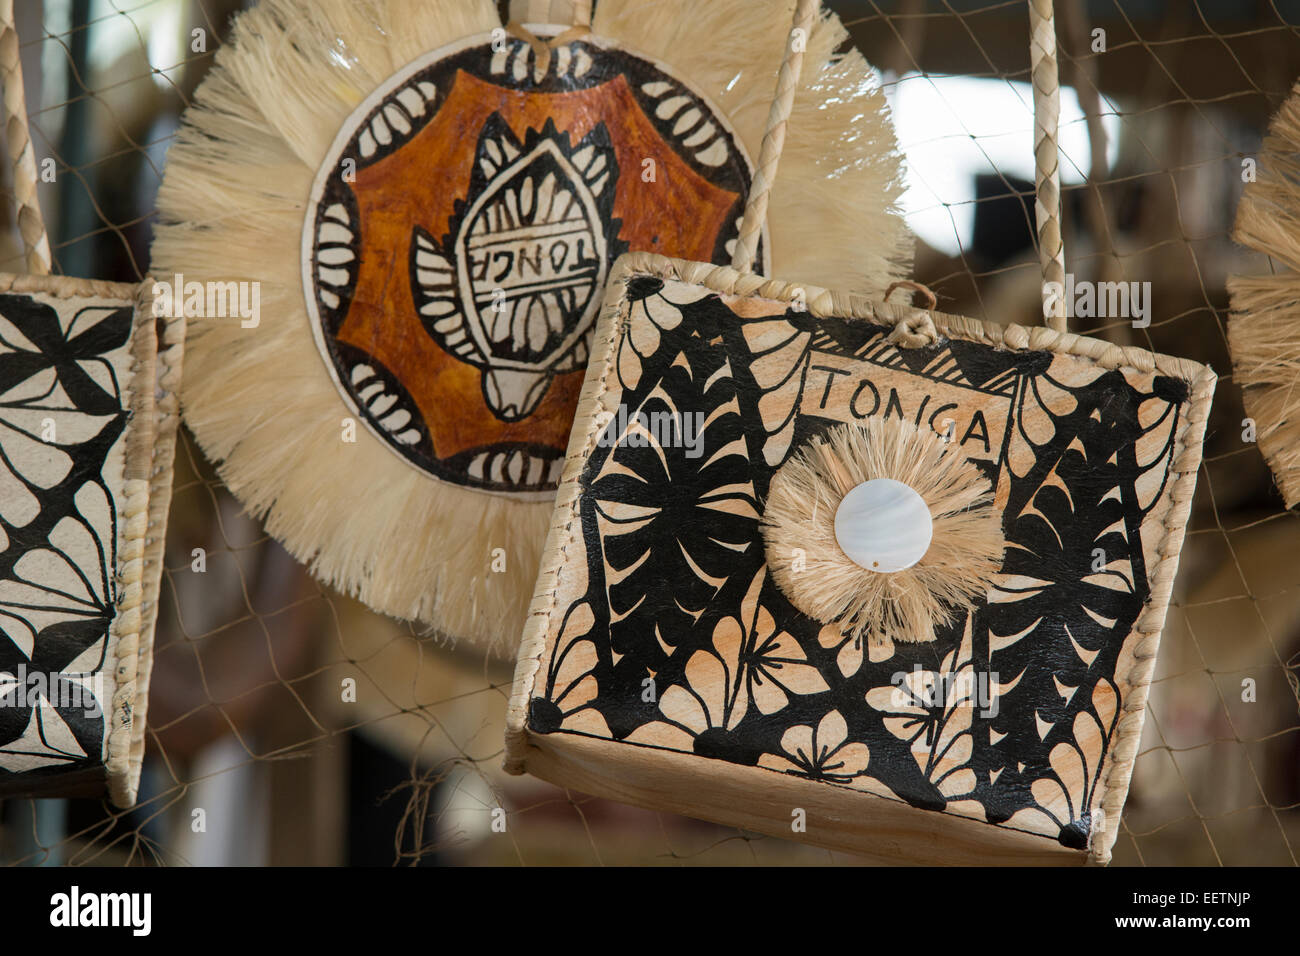 Royaume de Tonga, les îles Vava'u, Neiafu. Tissu tapa peint à la main artisanat de souvenirs. Banque D'Images